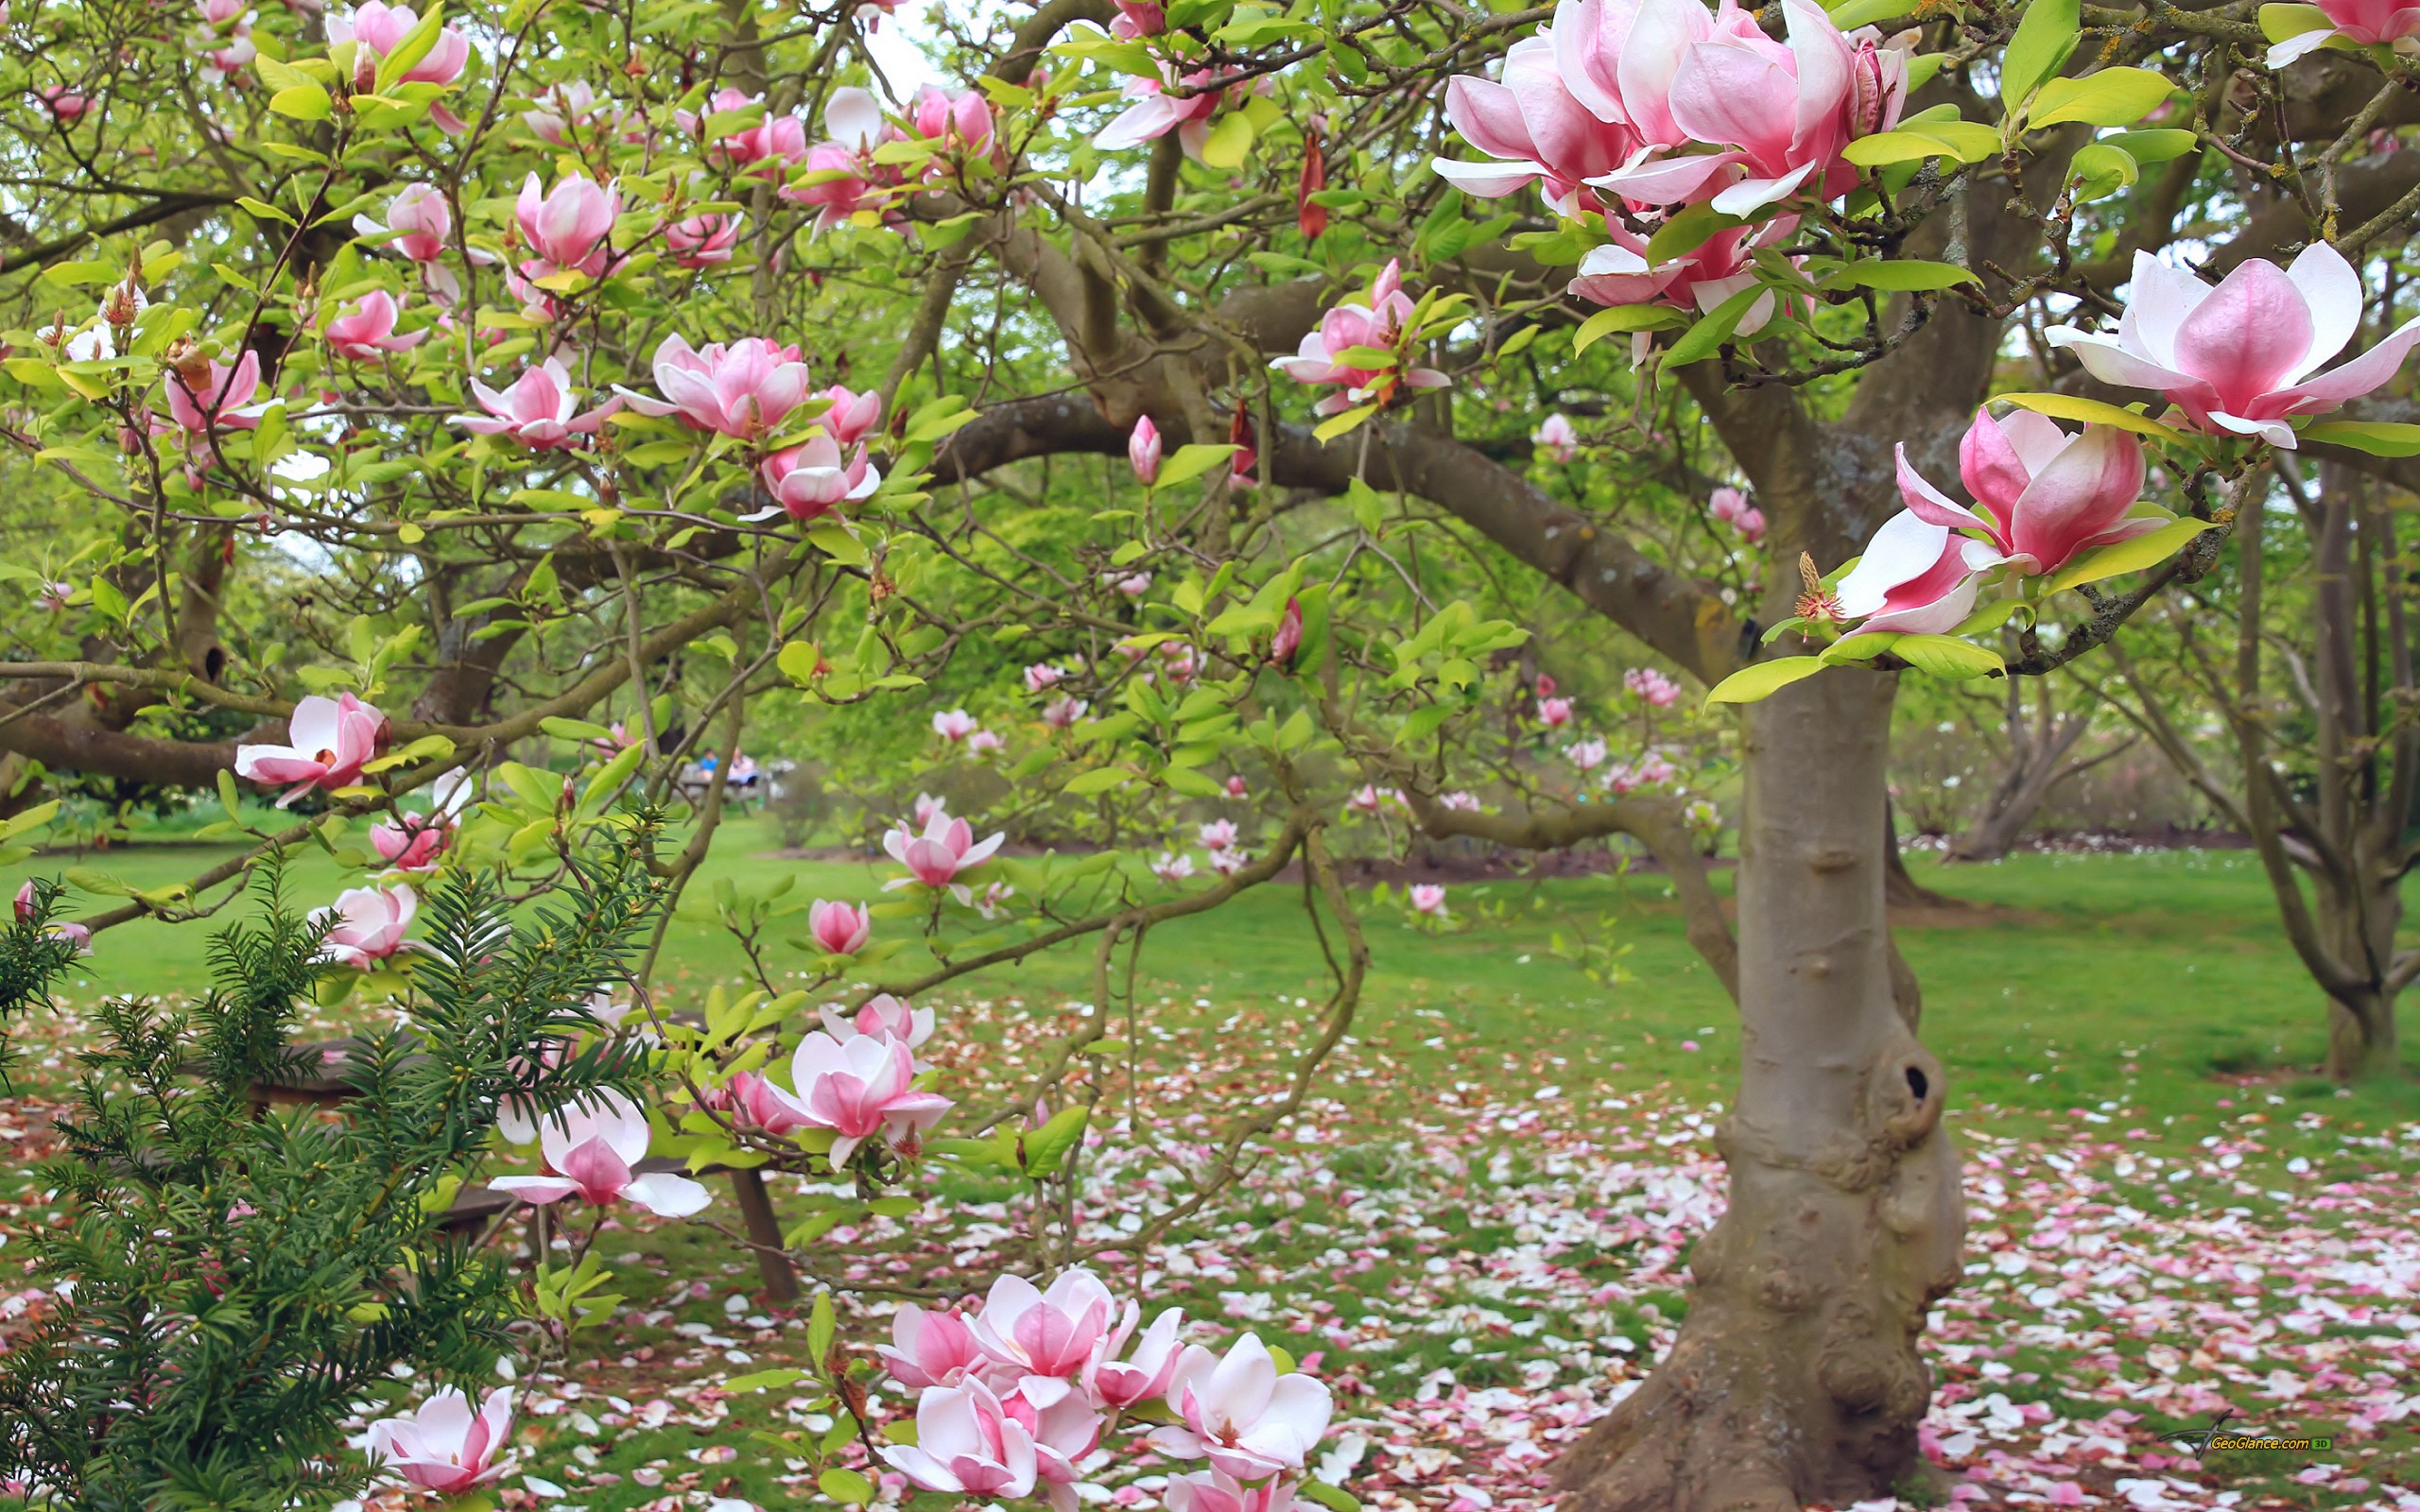 General 2560x1600 trees flowers grass magnolia plants park